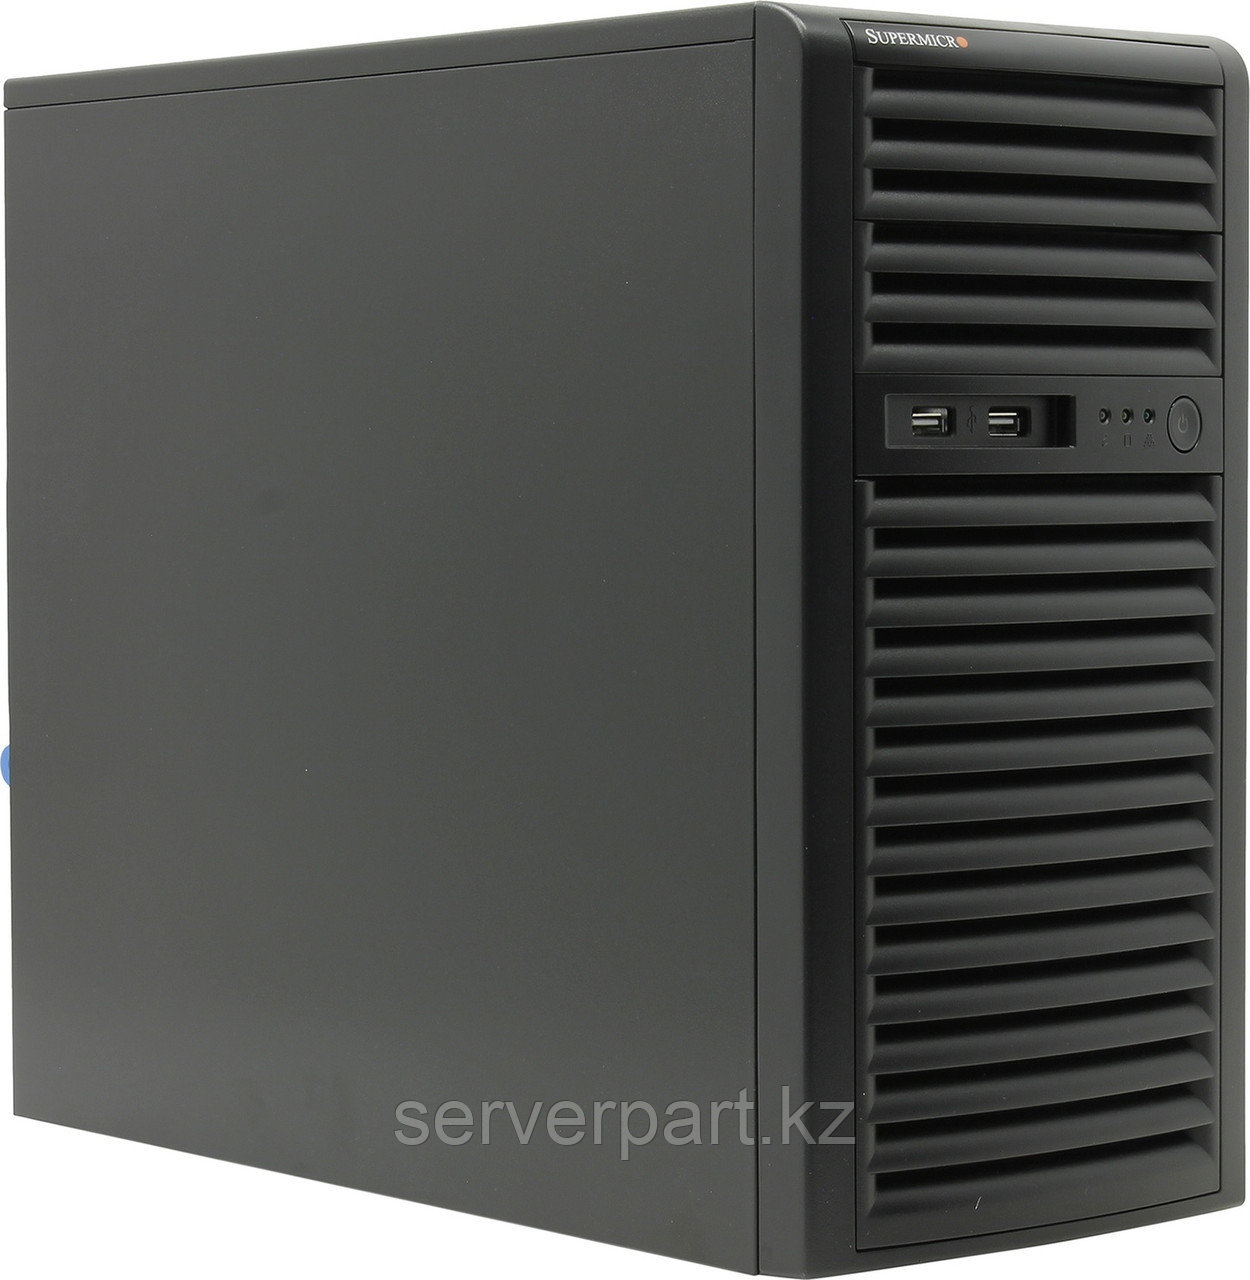 Сервер Supermicro 5039D Tower/4-core intel xeon E3-1220v6 3GHz/64GB UDIMM nECC/1x240GB SSD RI Hyb